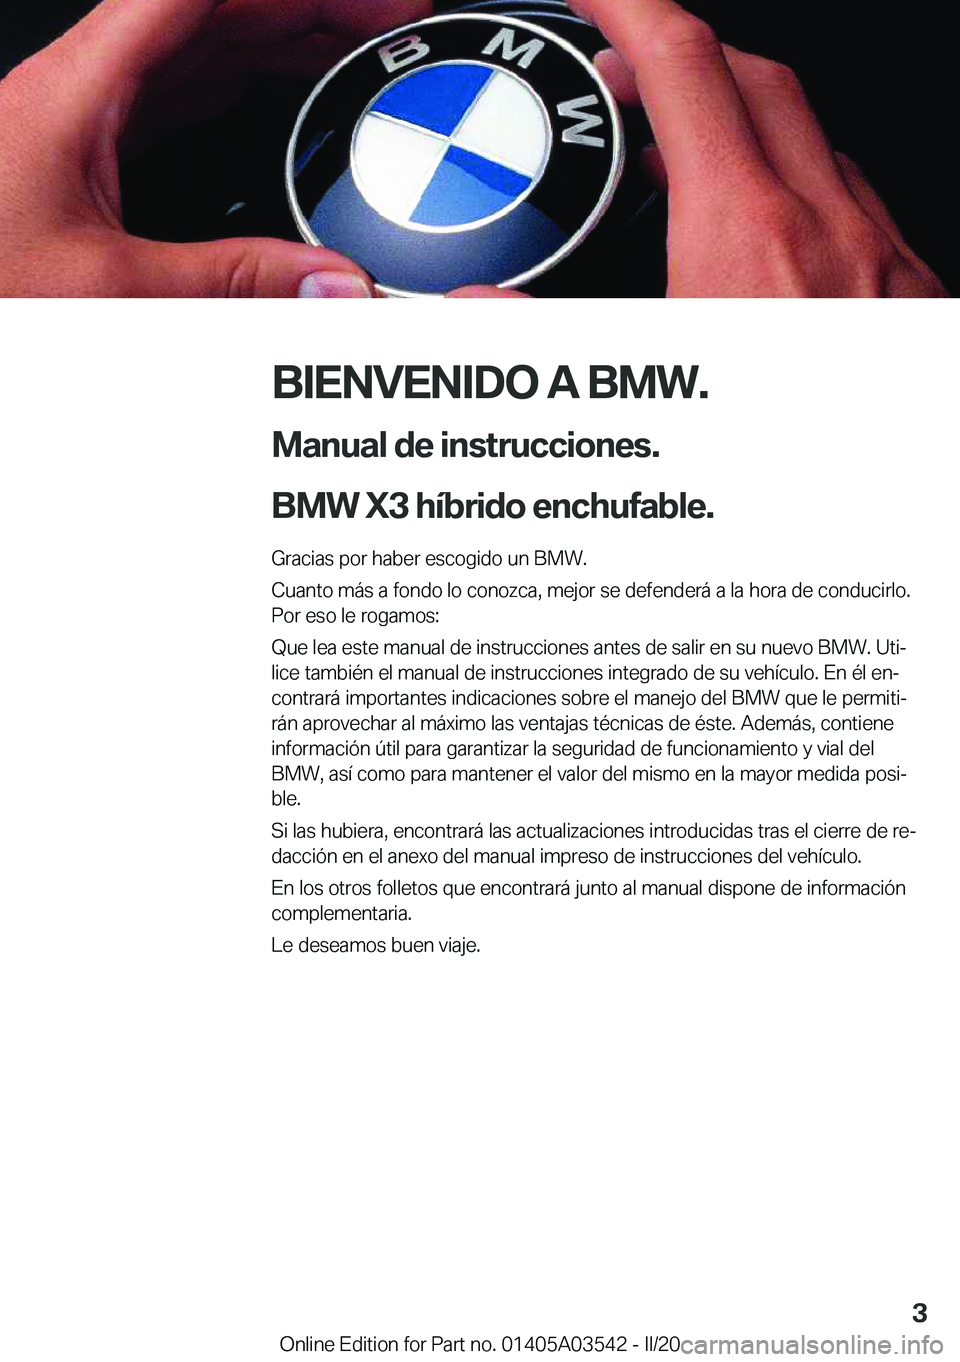 BMW X3 PLUG IN HYBRID 2020  Manuales de Empleo (in Spanish) �B�I�E�N�V�E�N�I�D�O��A��B�M�W�.
�M�a�n�u�a�l��d�e��i�n�s�t�r�u�c�c�i�o�n�e�s�.
�B�M�W��X�3��h�